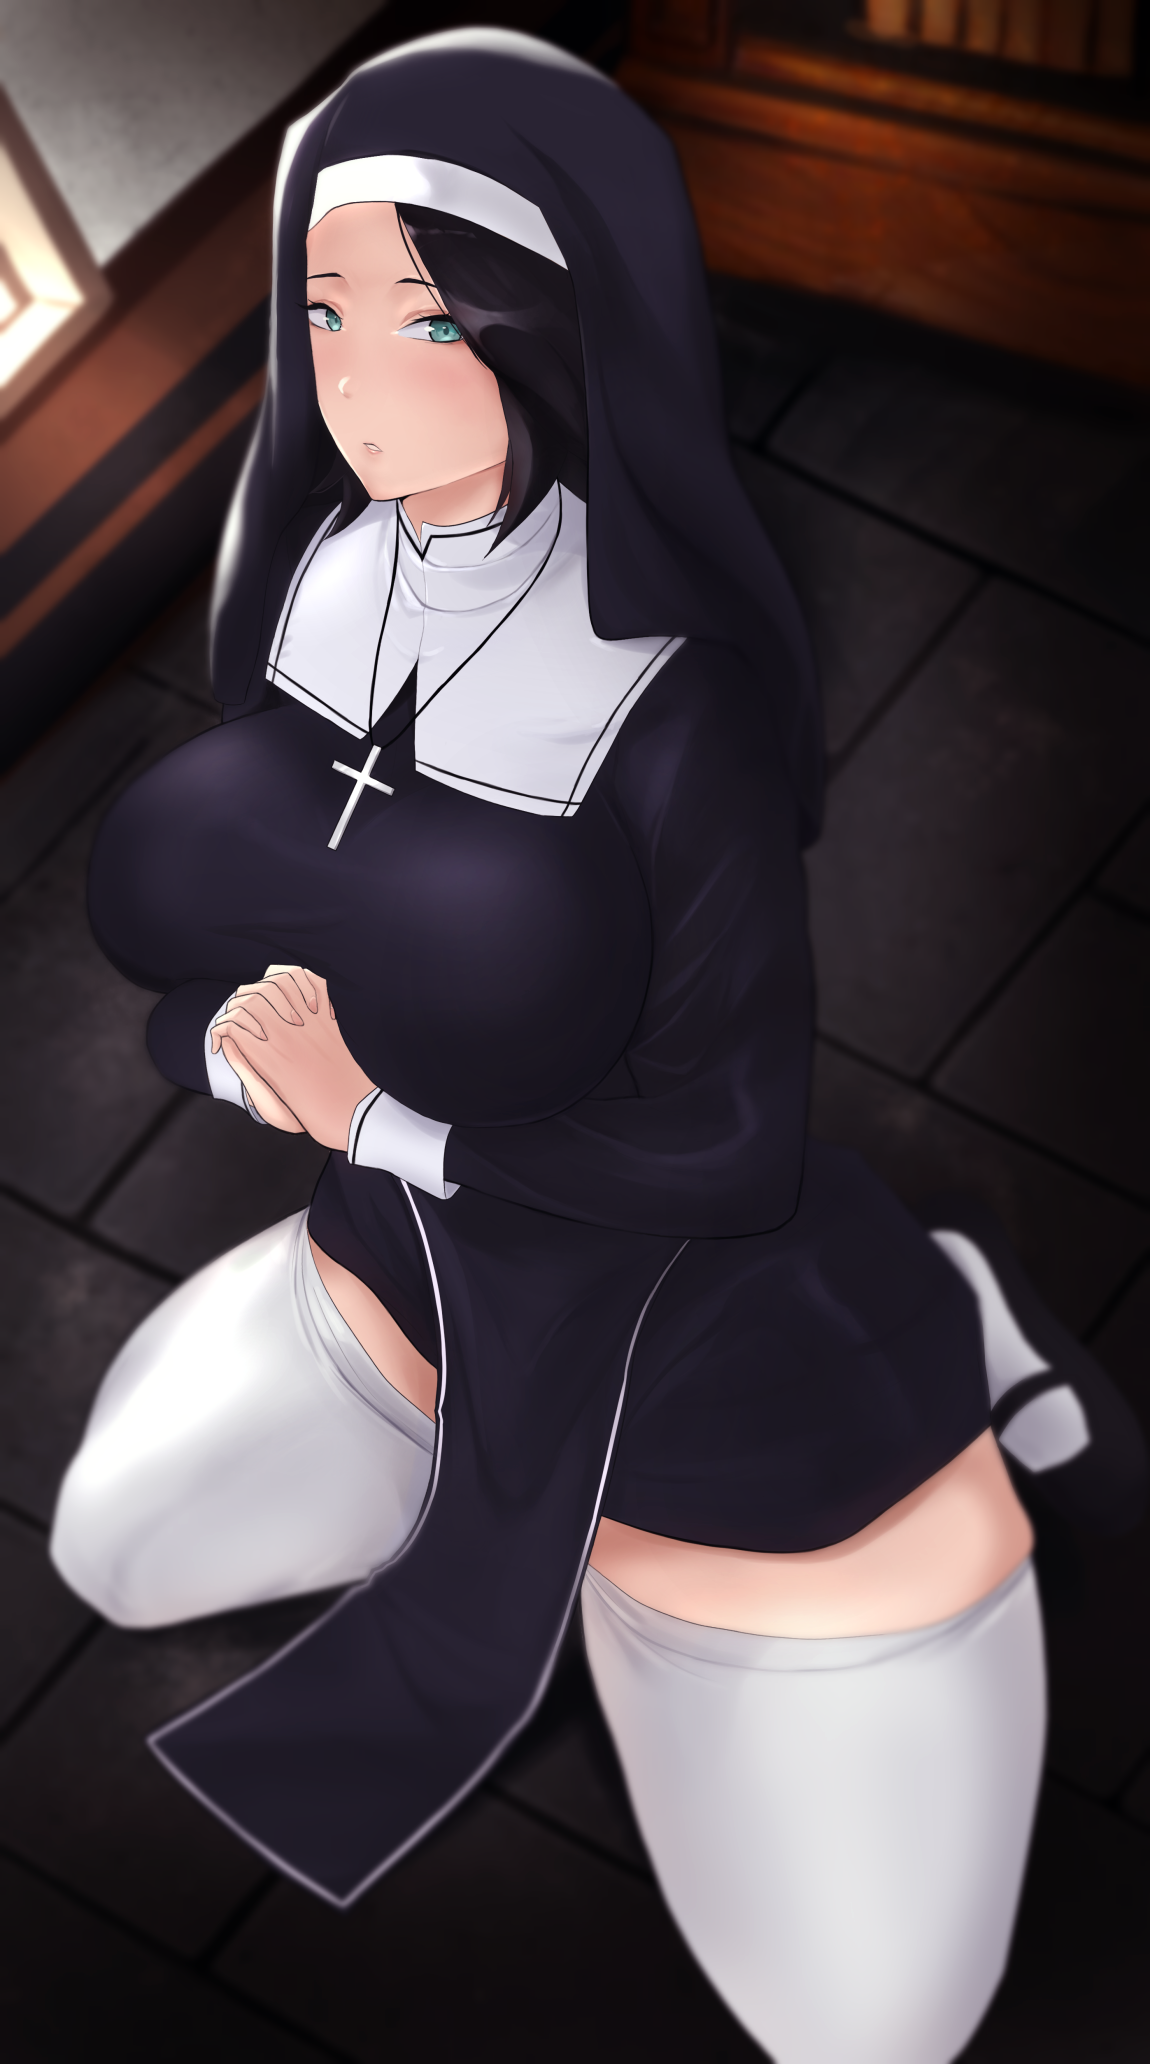 Anime 1150x2064 anime anime girls original characters solo artwork digital art fan art nuns nun outfit